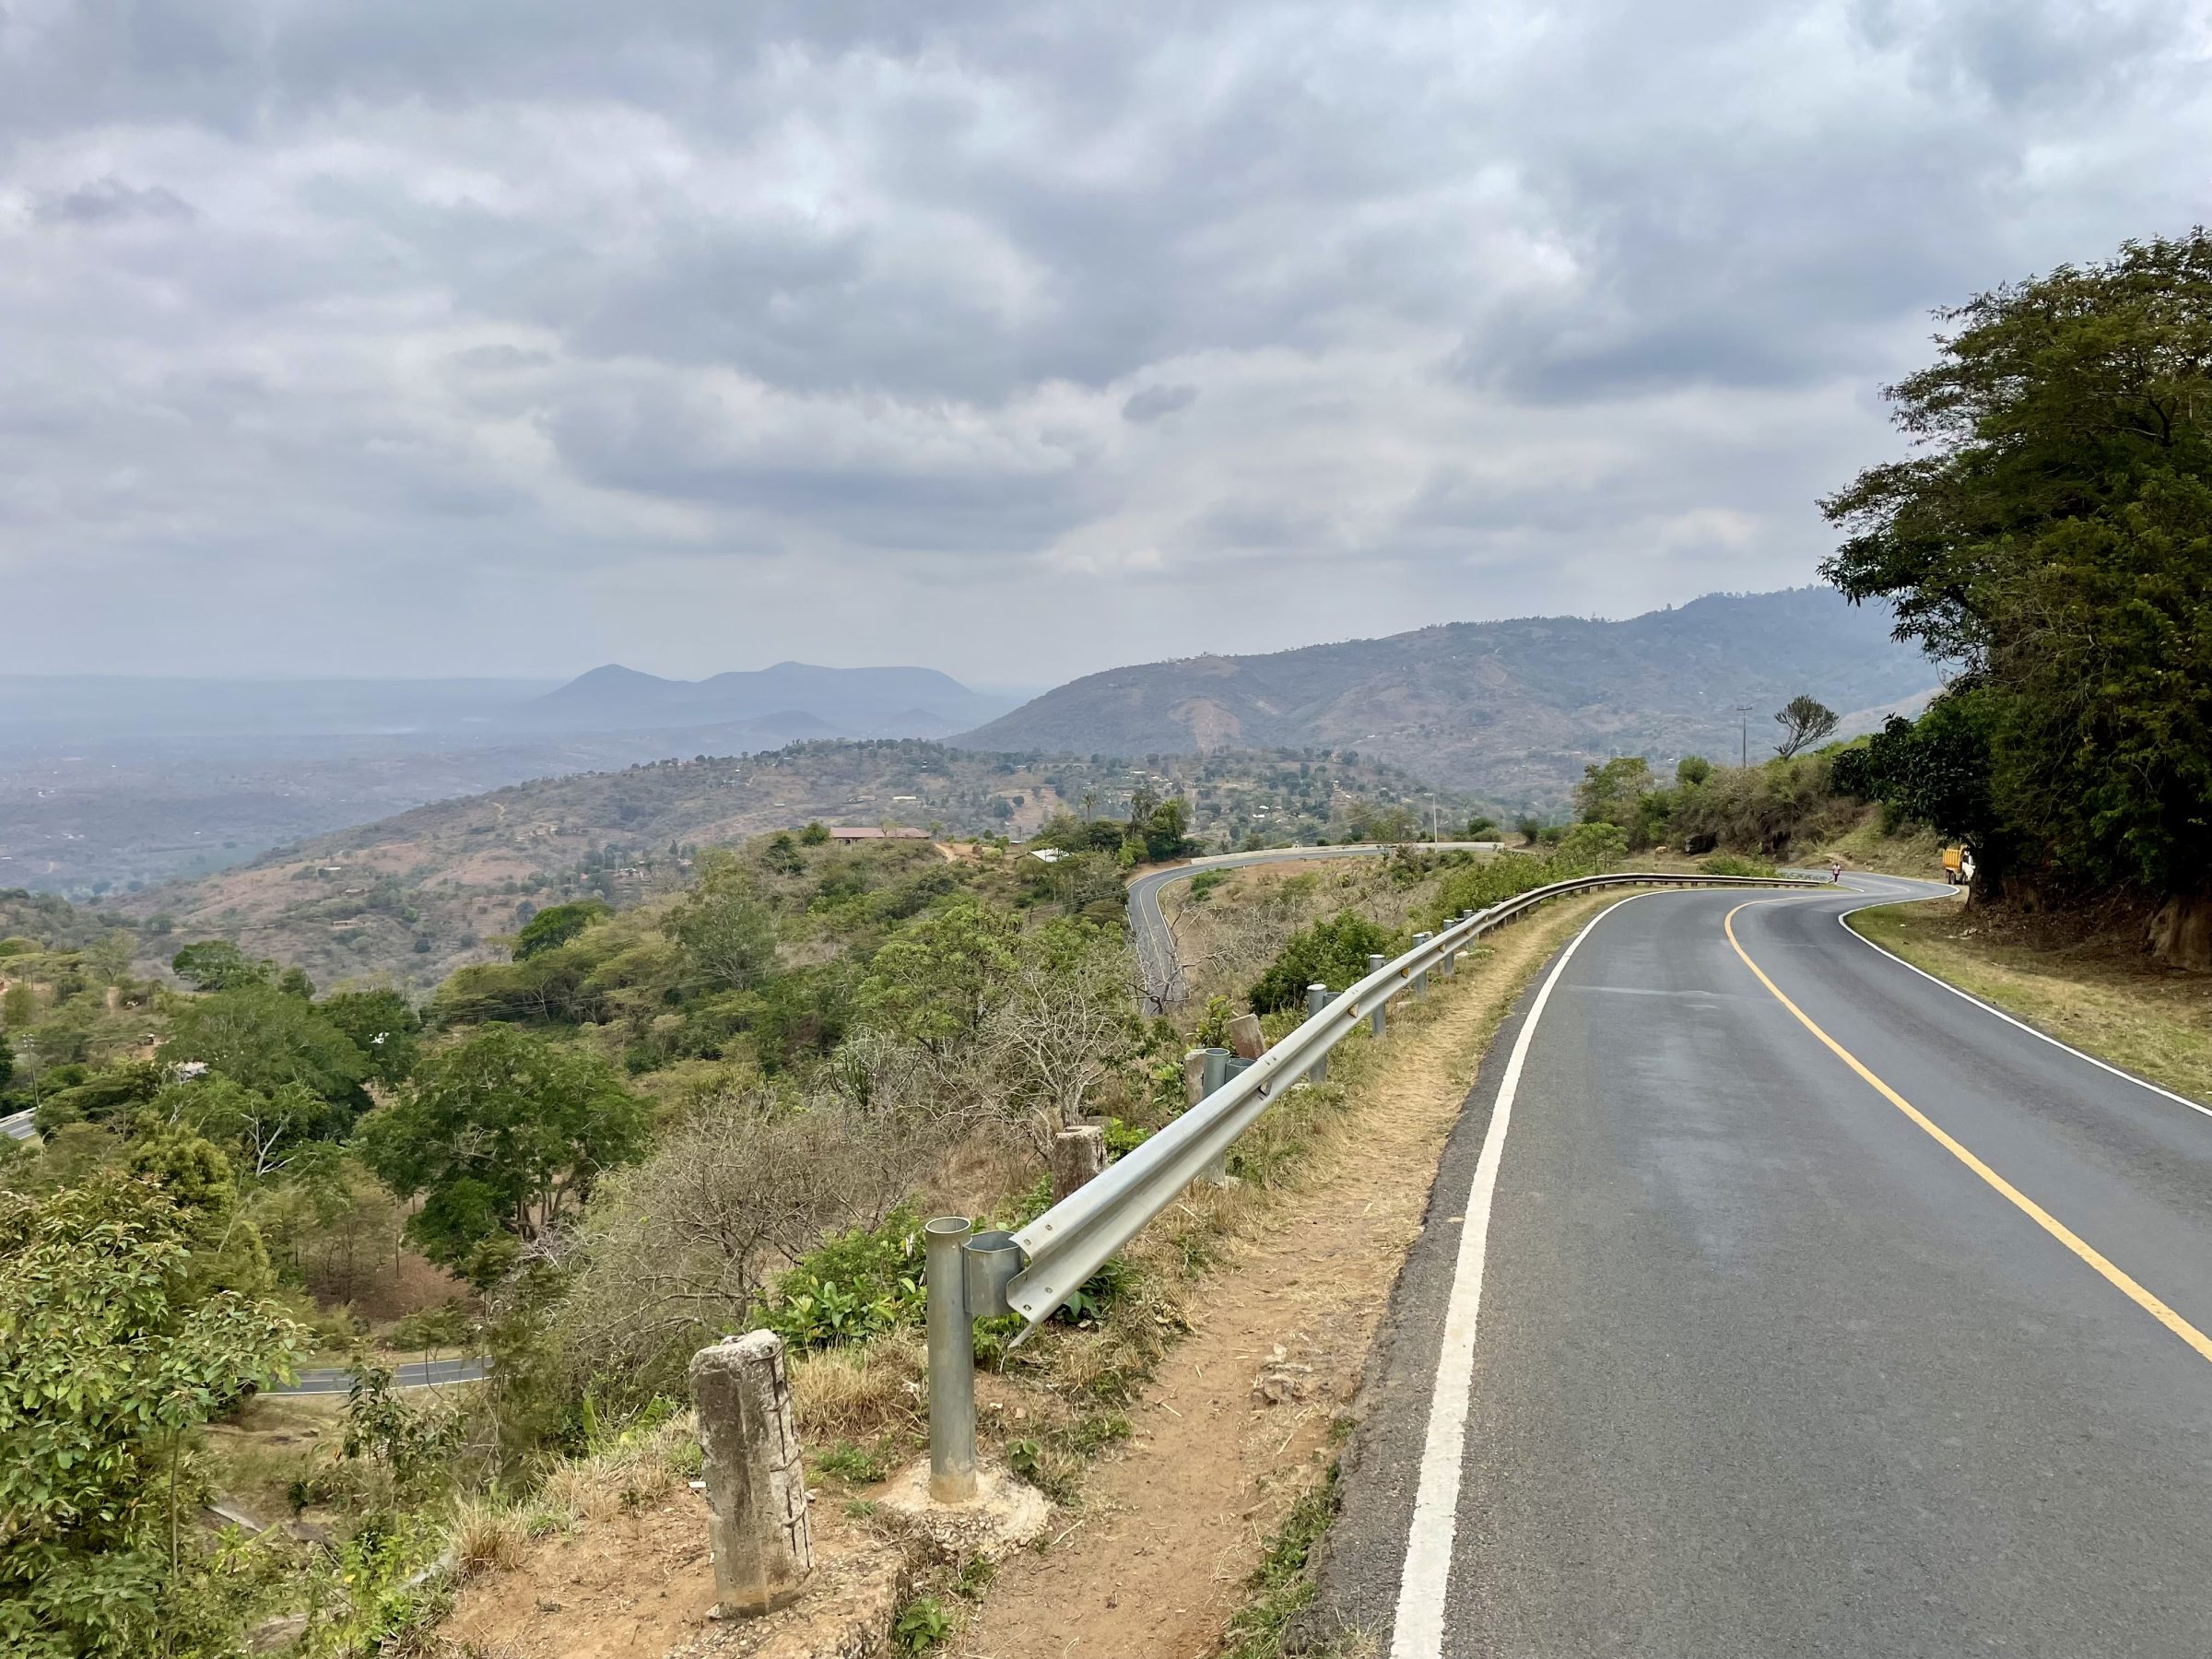 De nieuwe weg van Mwatate naar Wundanyi